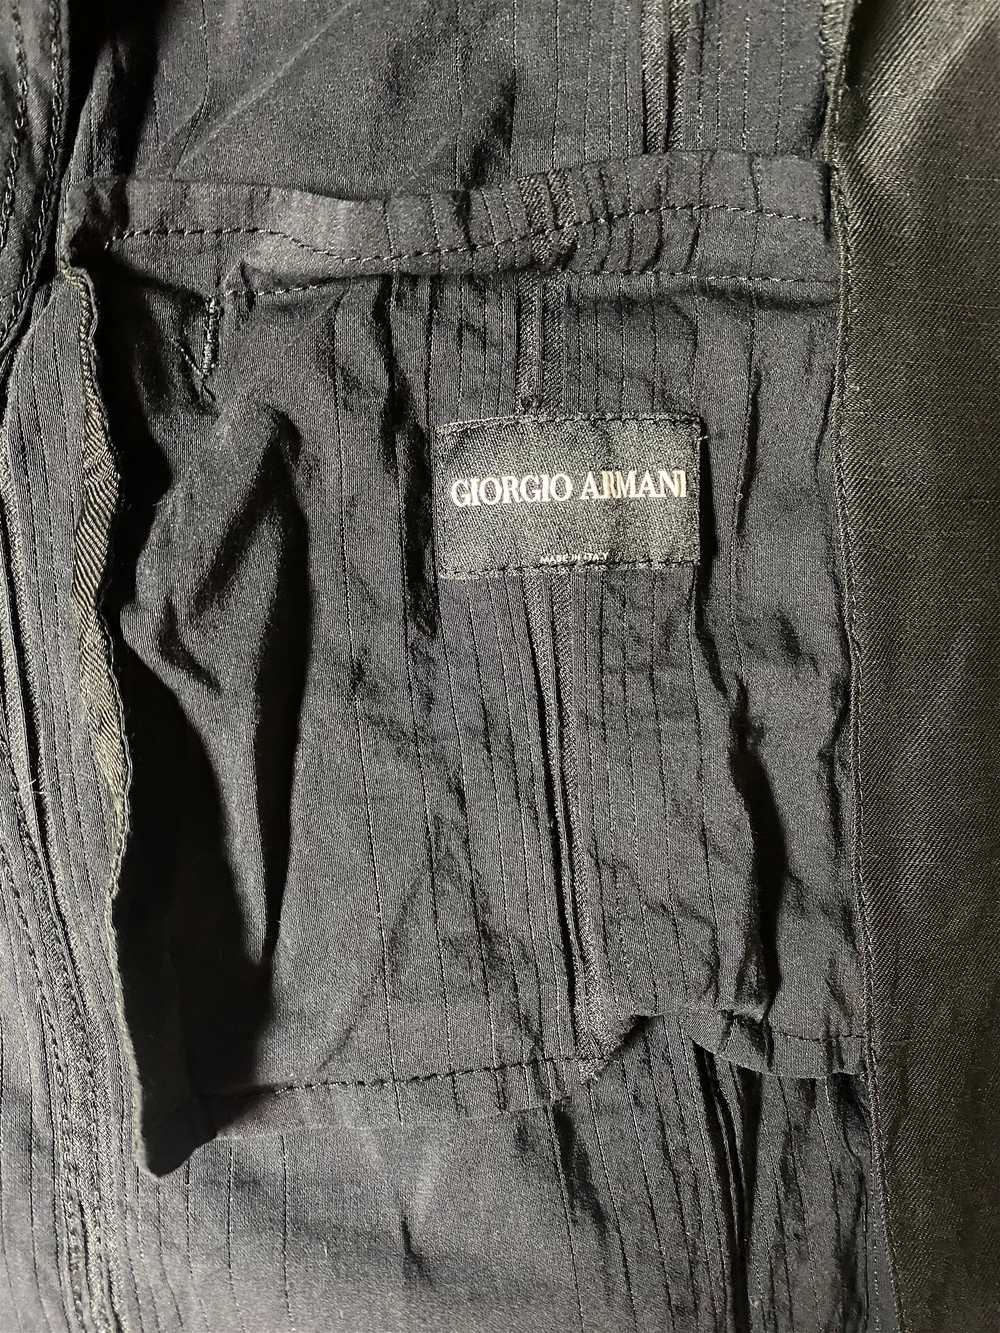 Giorgio Armani Navy and Black Top Jacket - image 6